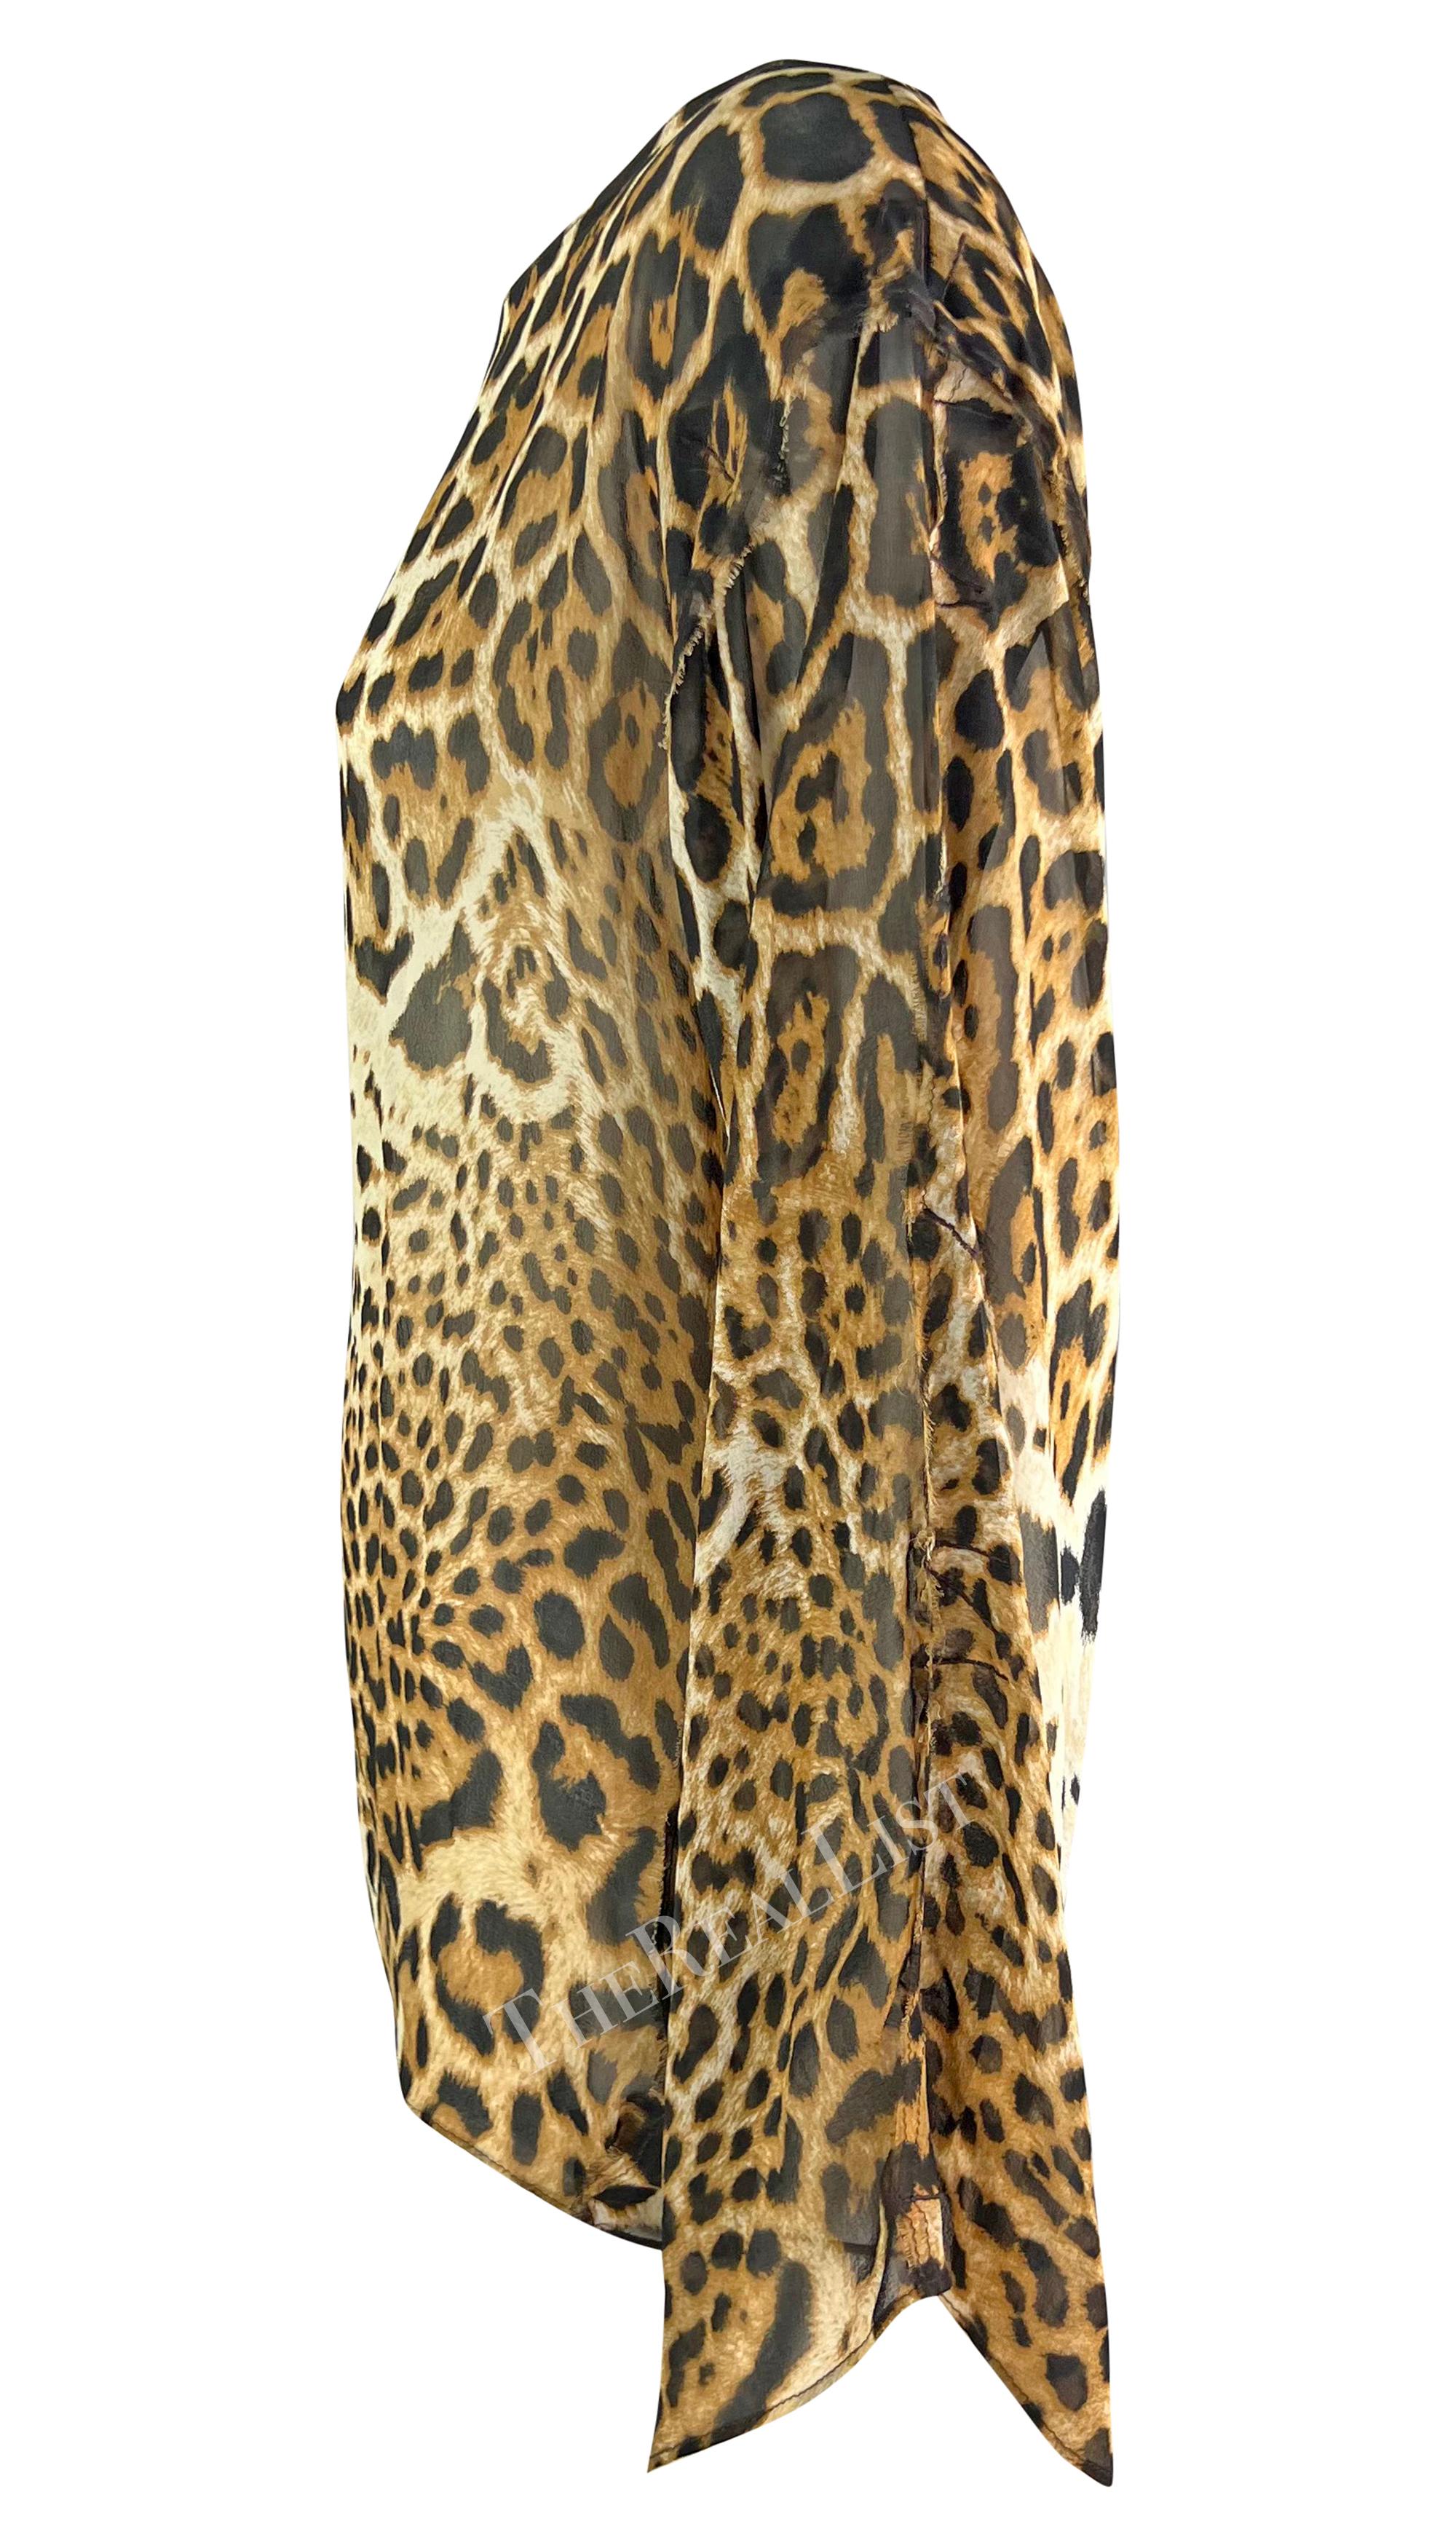 S/S 2002 Yves Saint Laurent by Tom Ford Safari Cheetah Print Sheer Silk Top For Sale 1